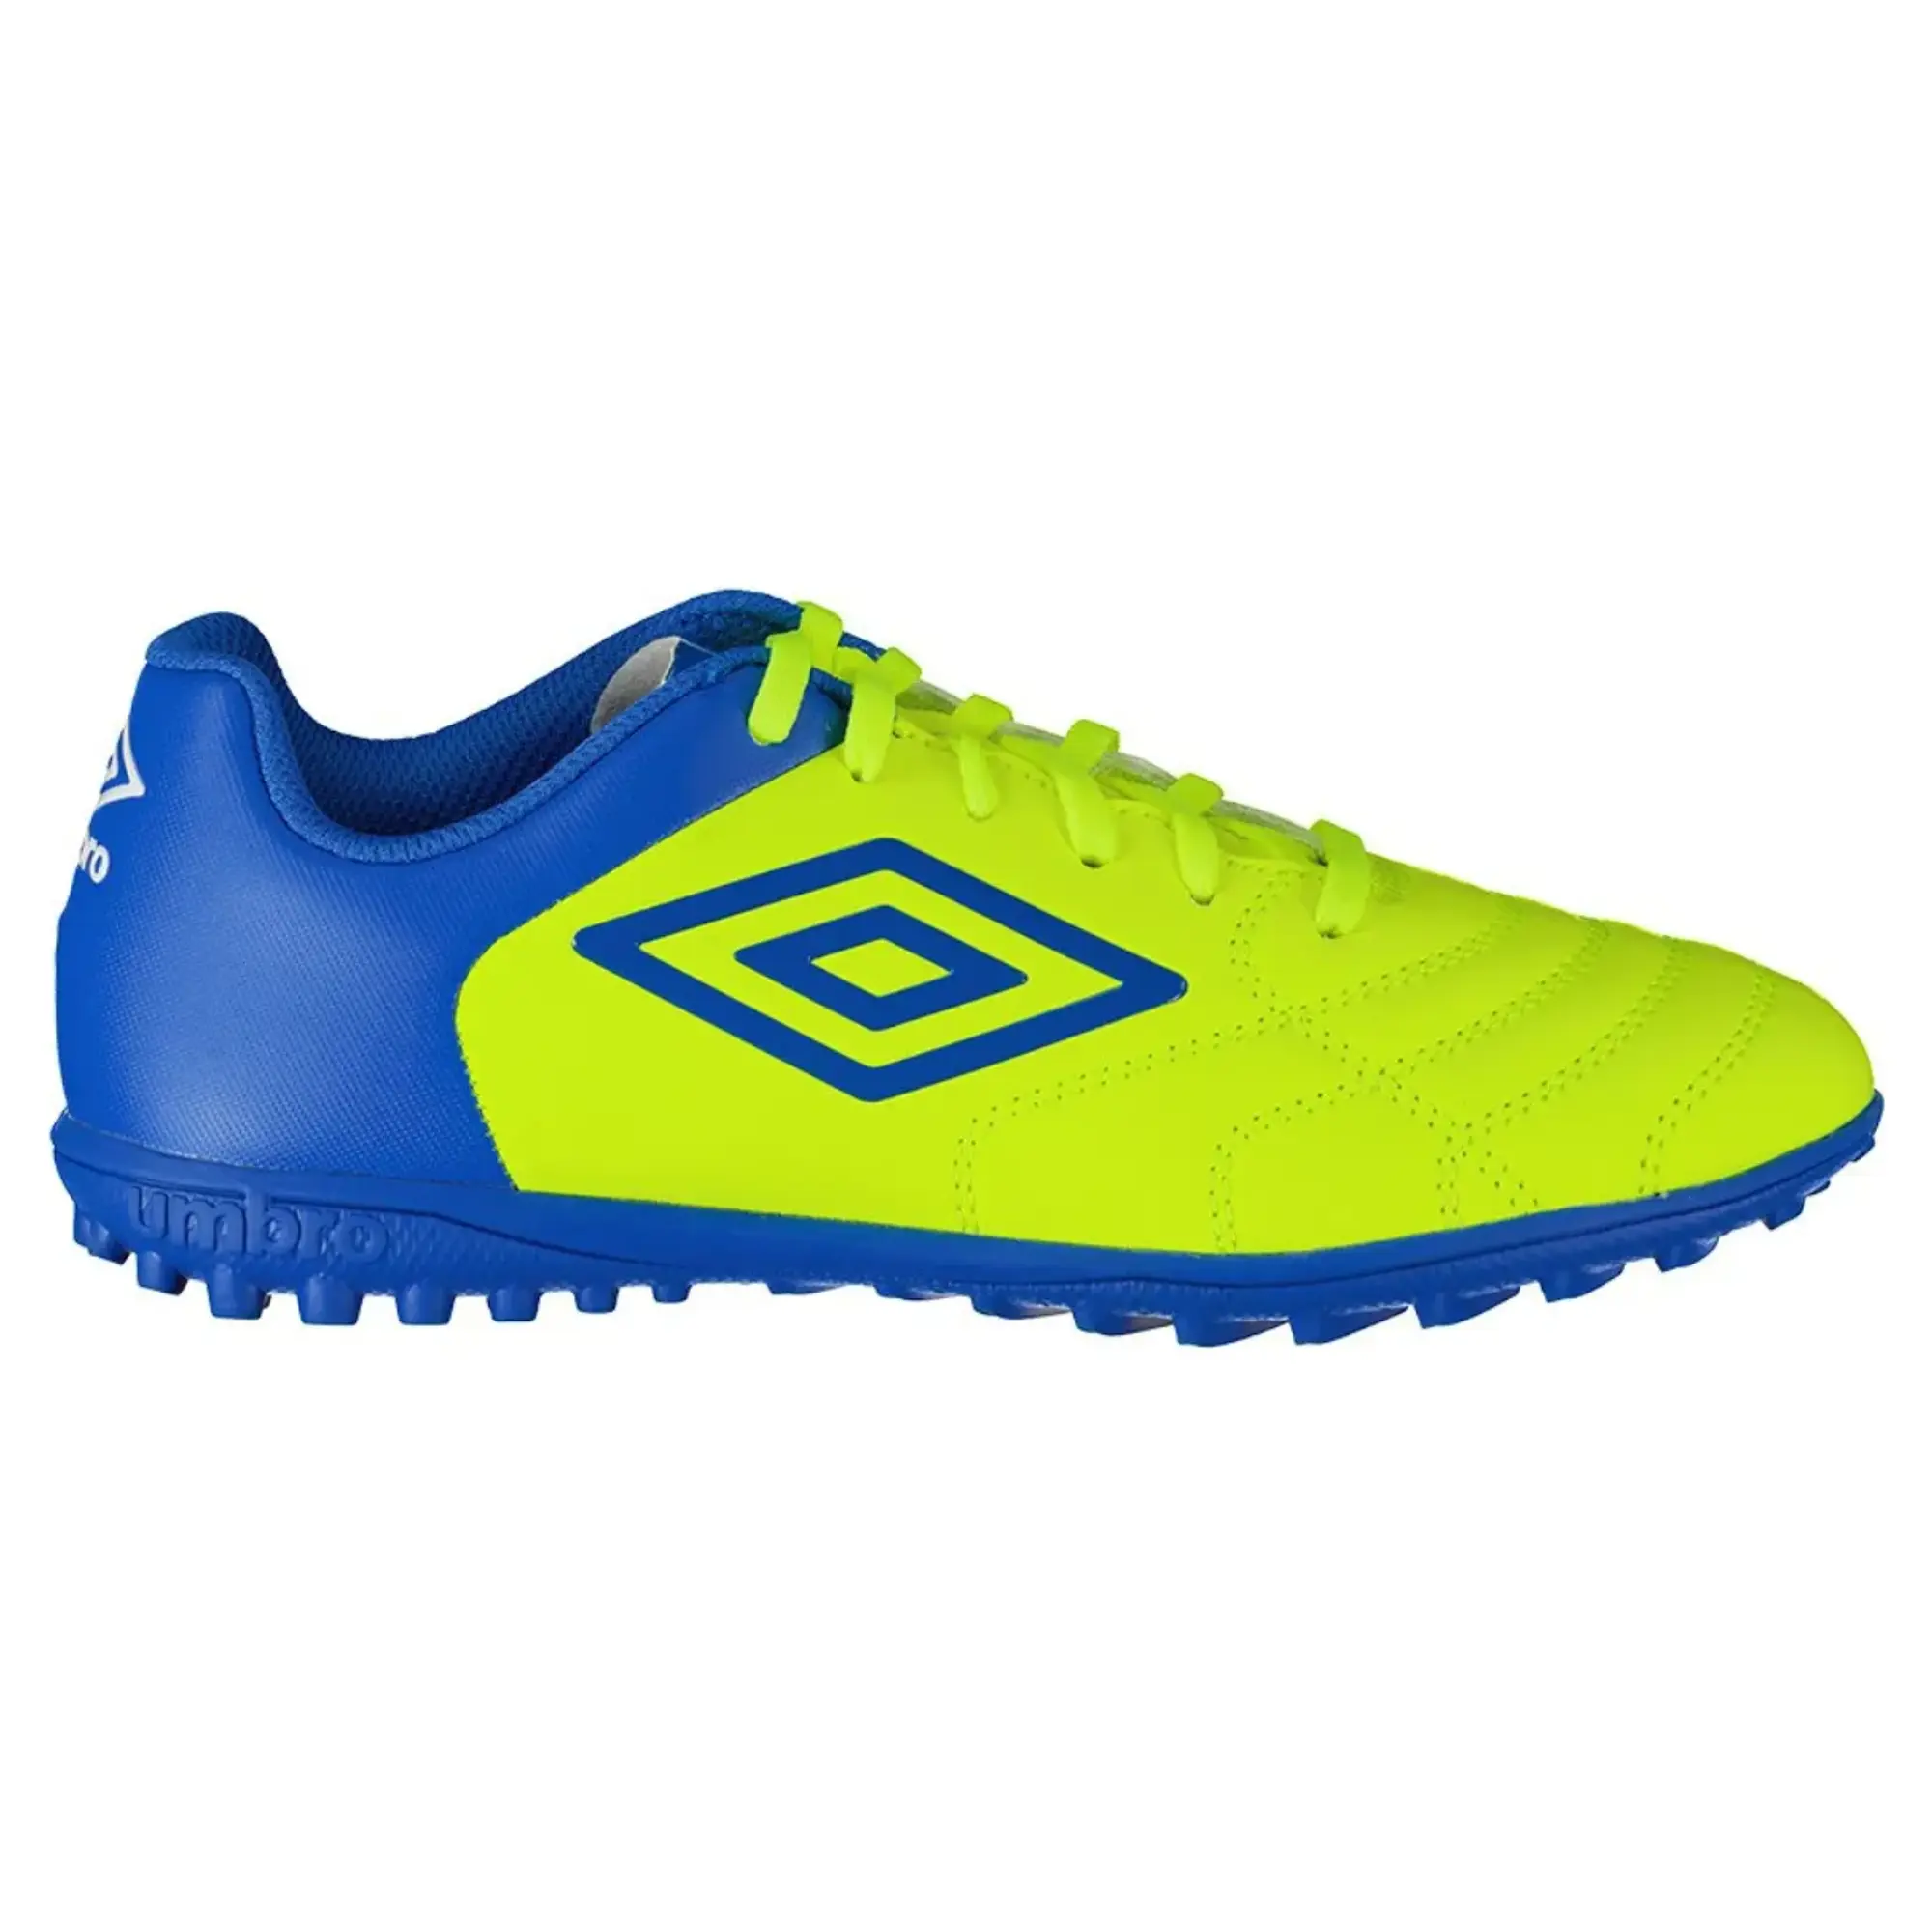 Umbro Classico Xi Tf Football Boots  - Green